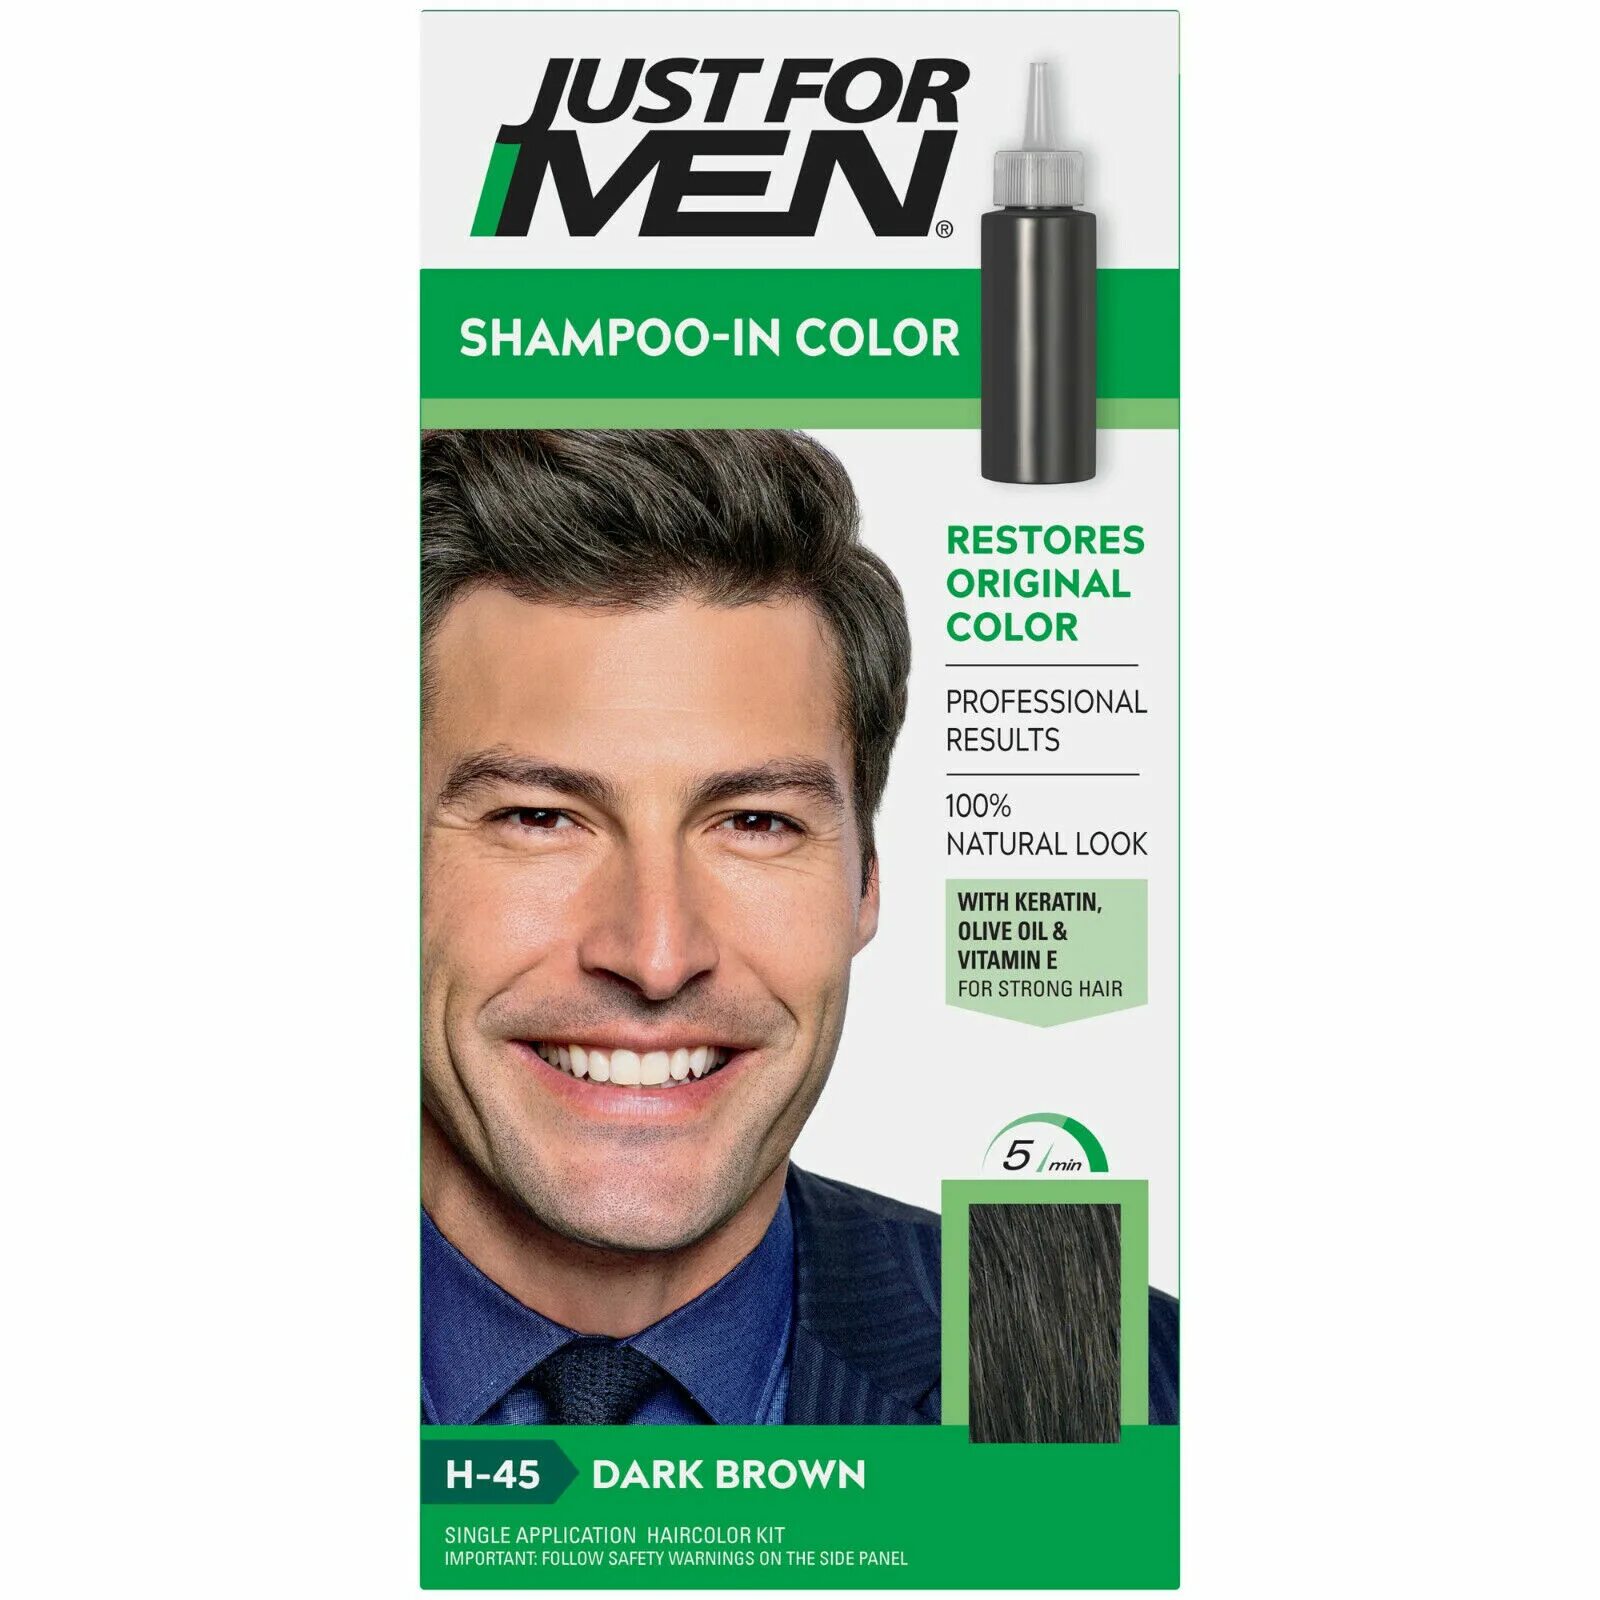 Тонирующий шампунь для мужчин. Just for men. Shampoo for men. Combe just for men Shampoo-in Haircolor отзывы. Just for men 5 minutes hair Ink.